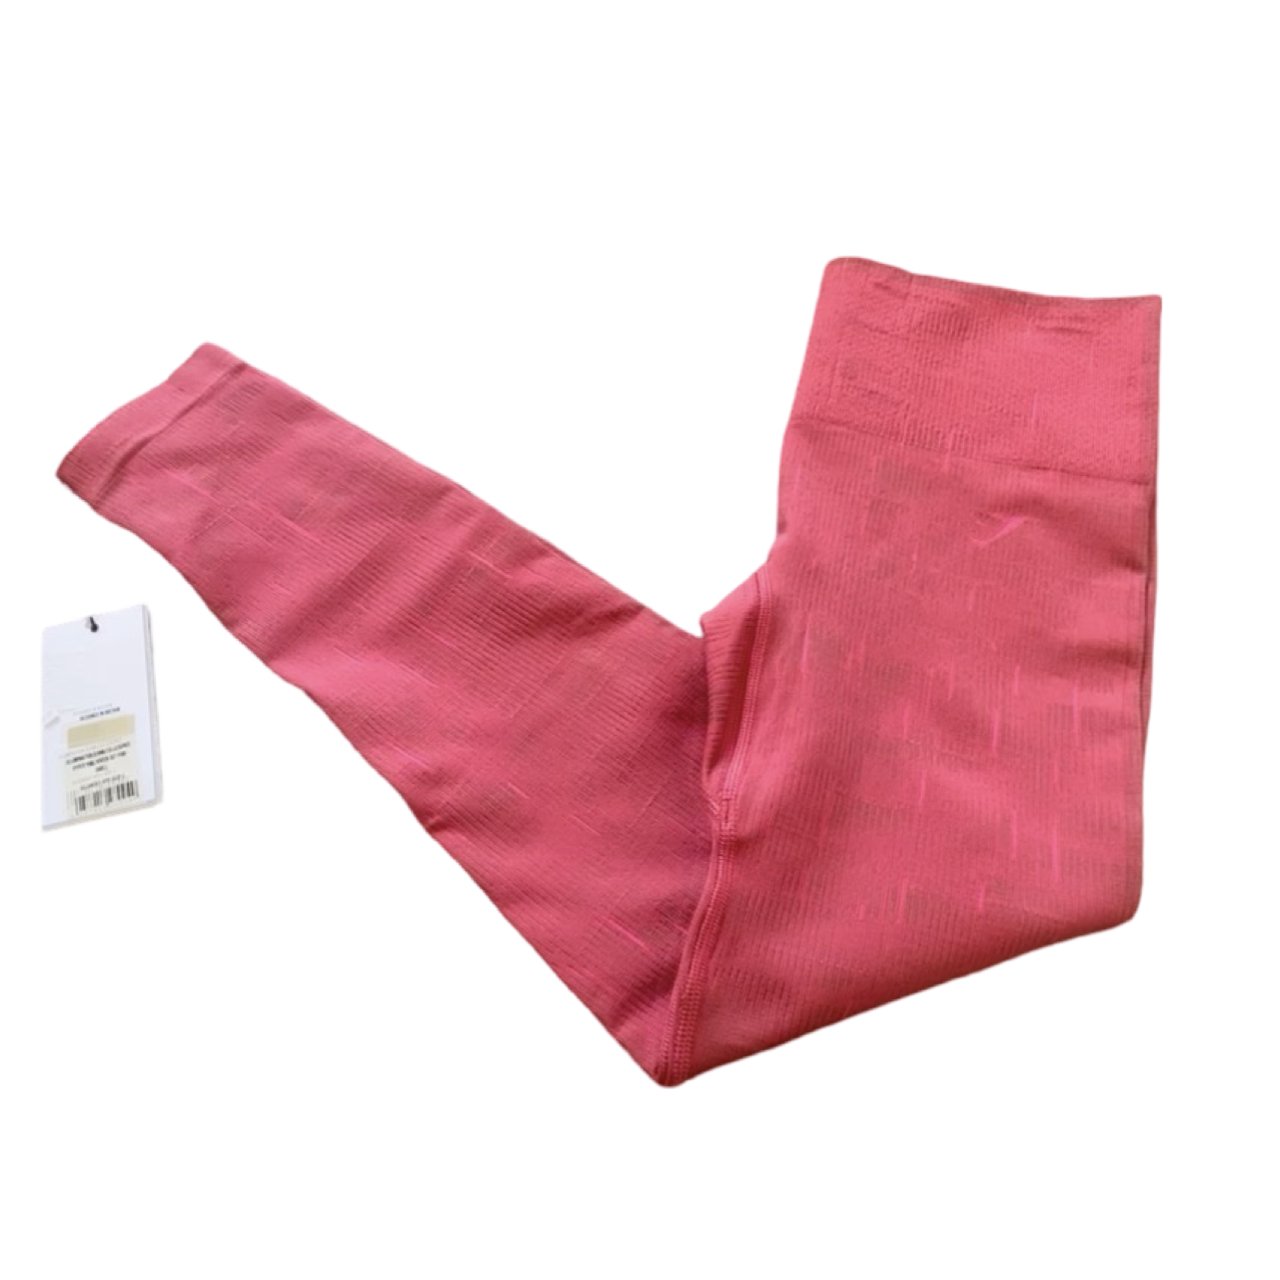 Authentic Gymshark Illumination Seamless leggings Women Pink - Small - Soul and Sense Streetwear